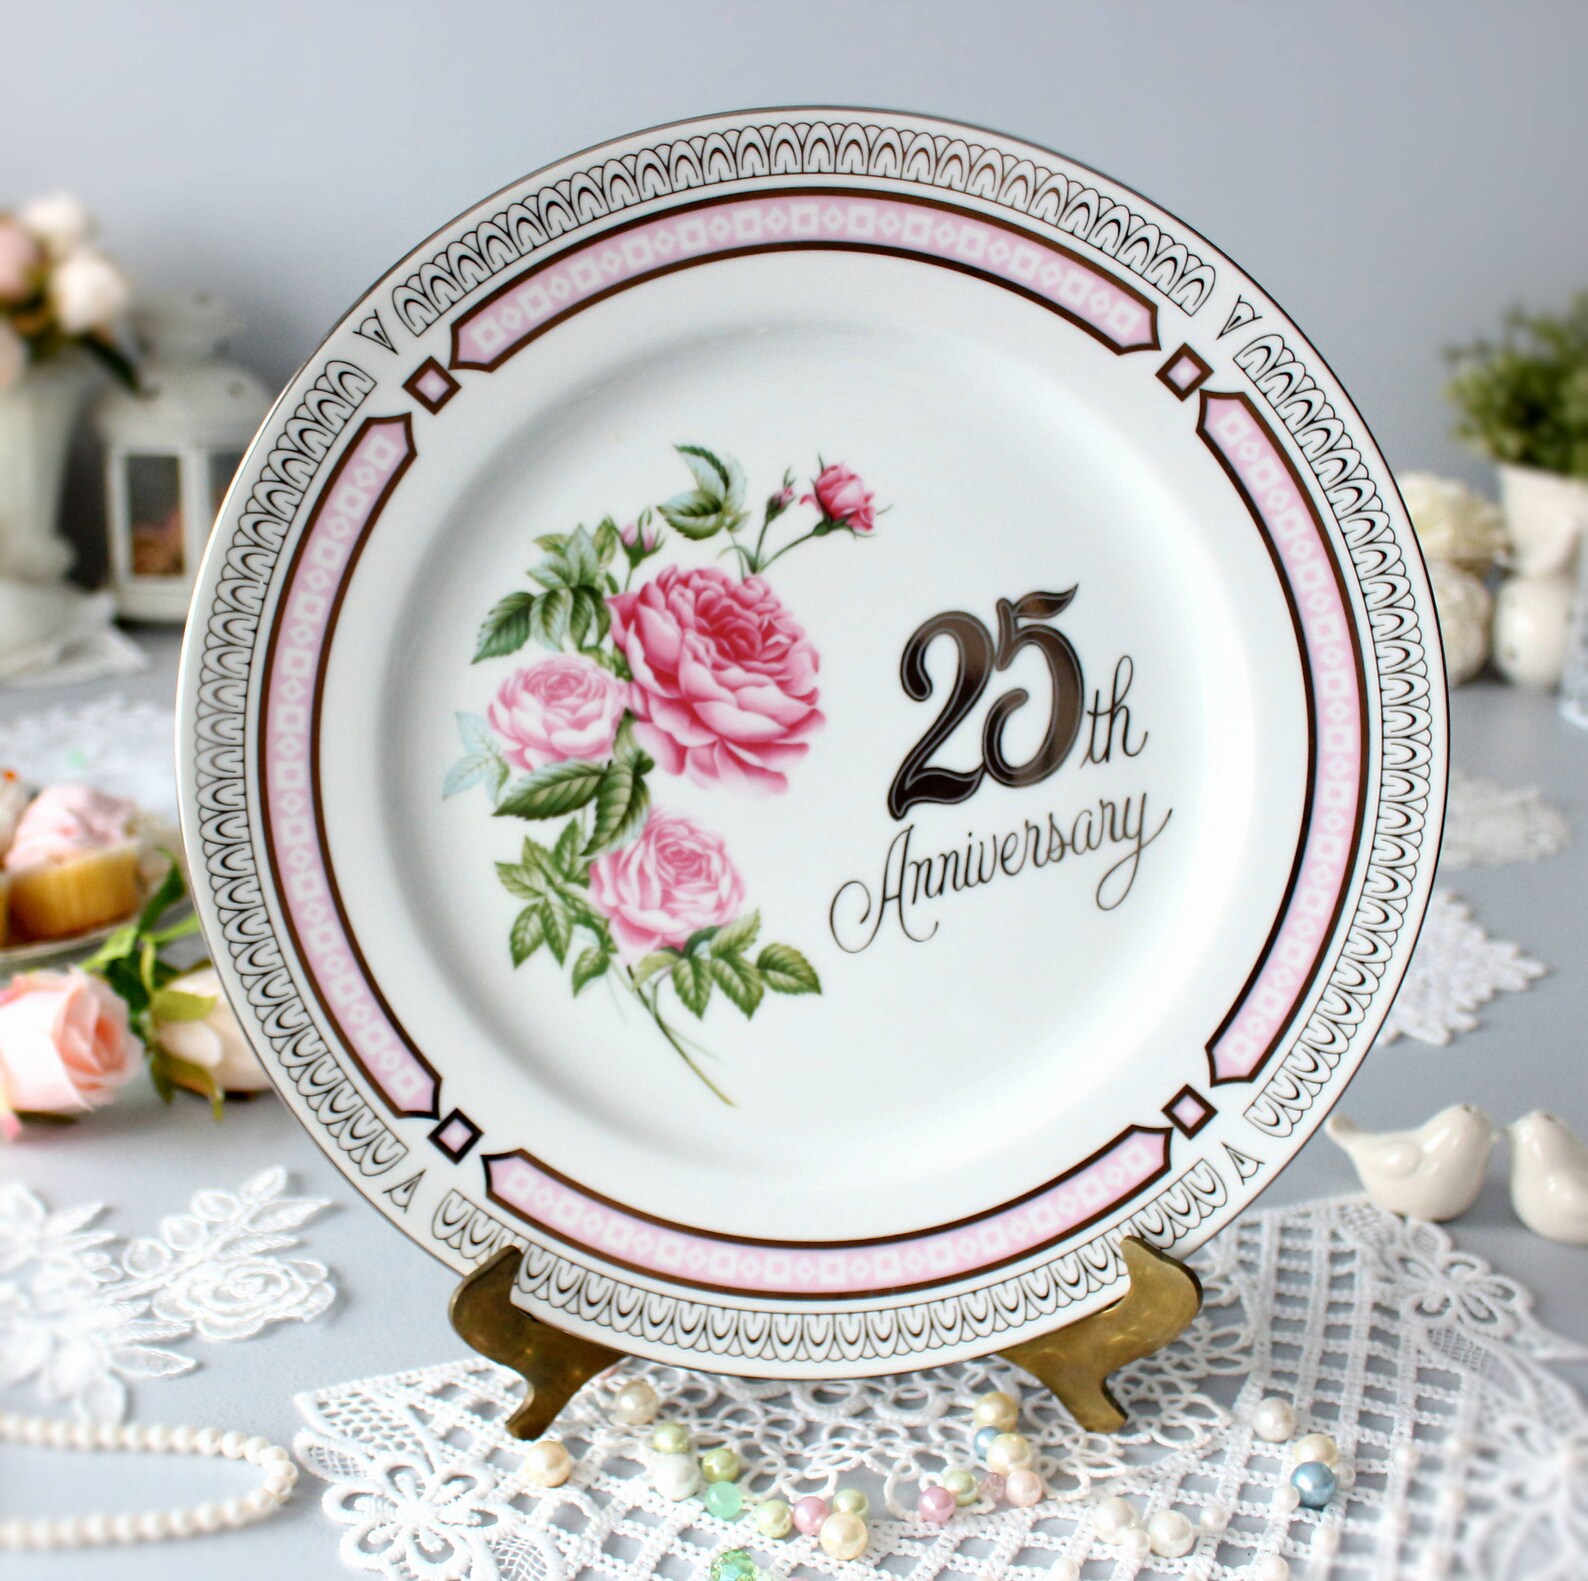 25th anniversary plate